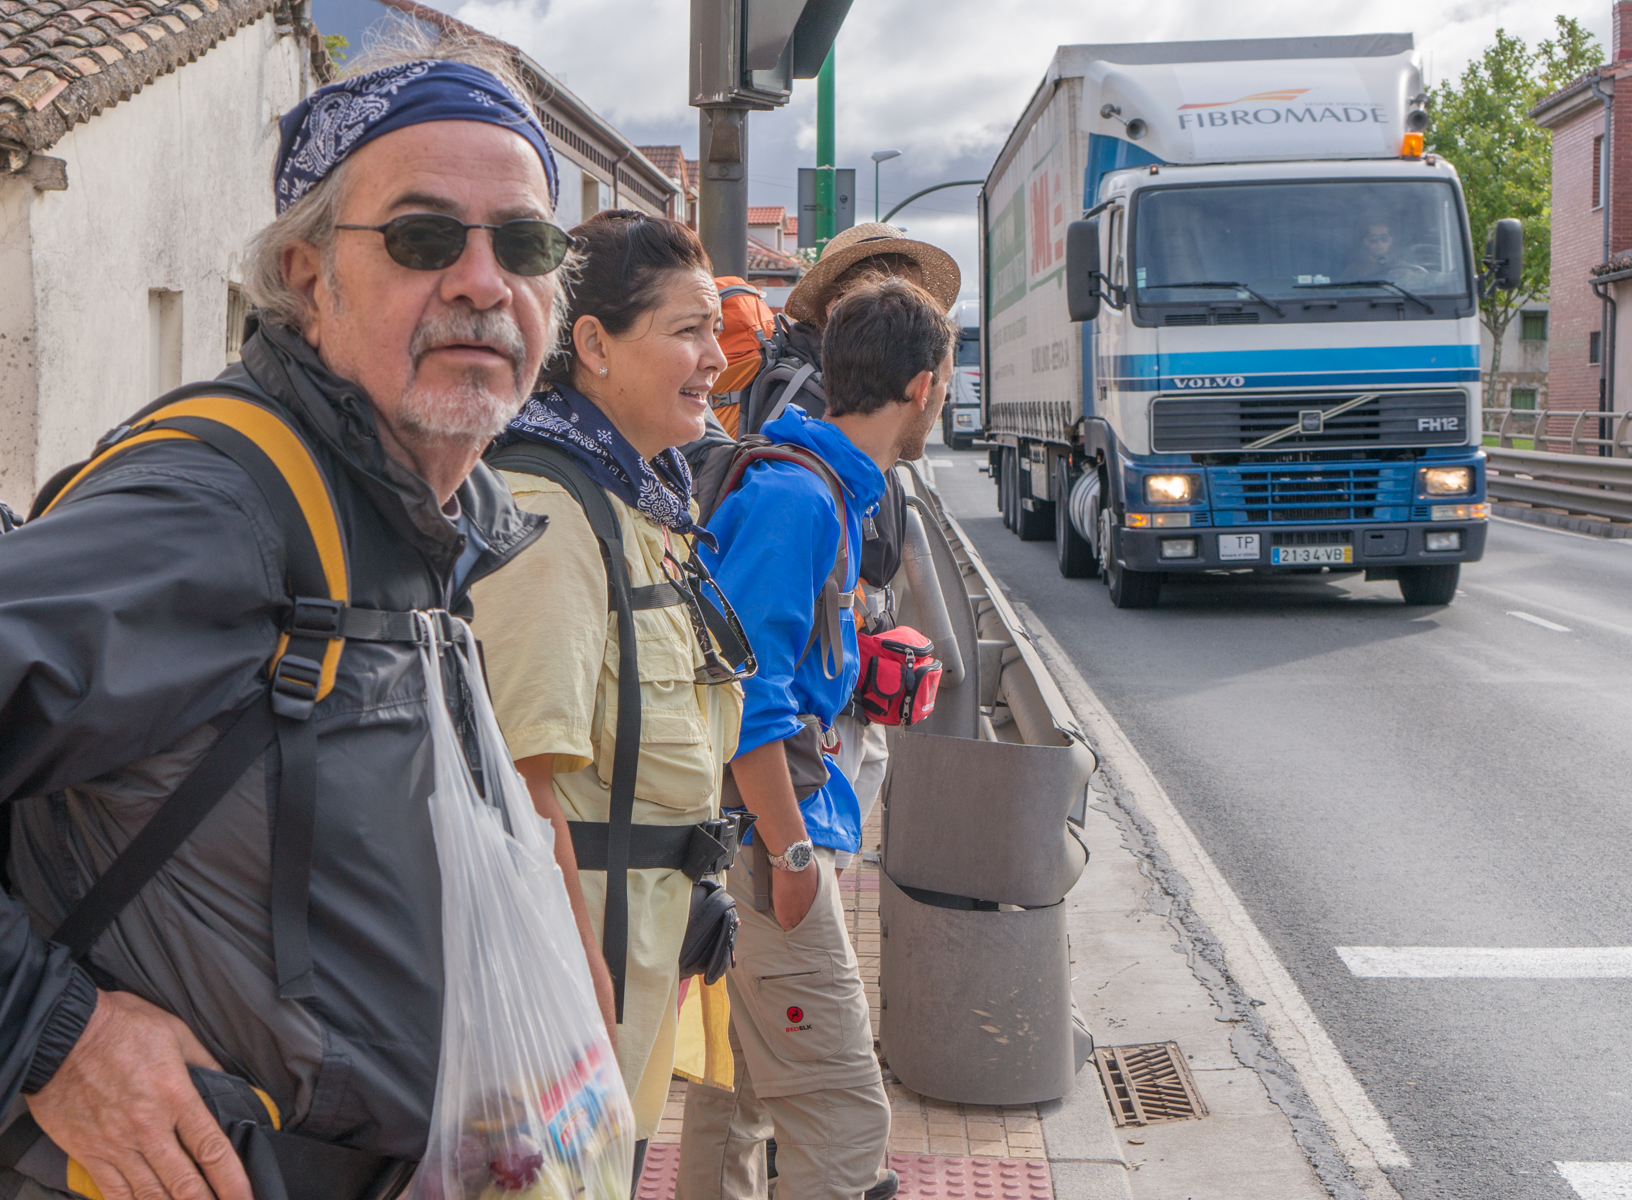 Camino pilgrims walk through the crowded streets of Castañares, a suburb of Burgos, Spain | Photo by Mike Hudak